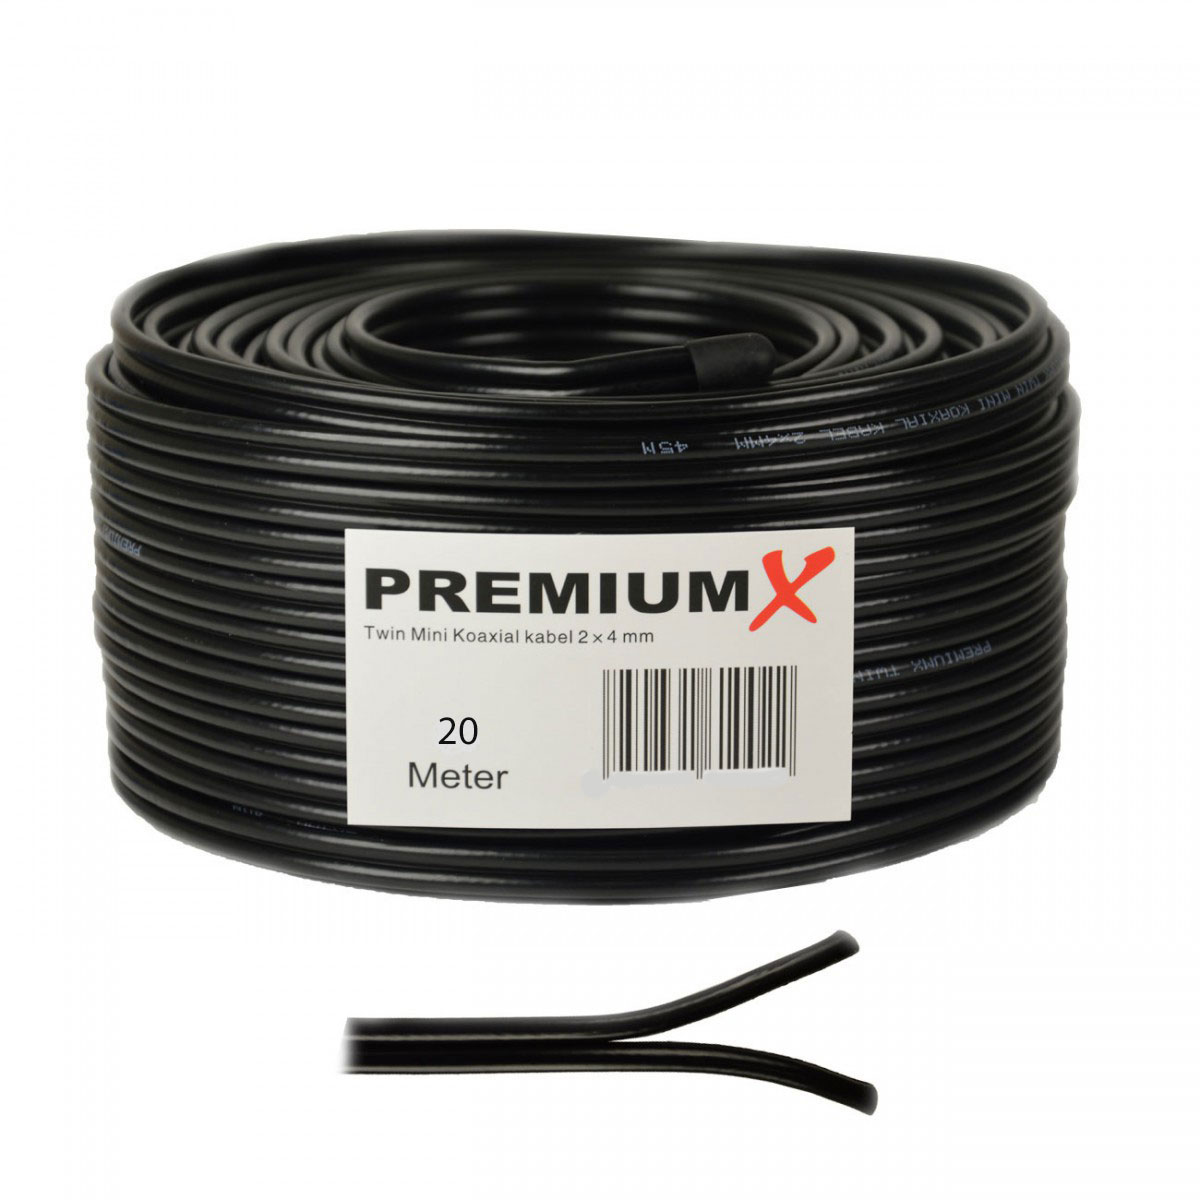 2-fach PREMIUMX Koaxial x Kabel geschirmt Mini 2 20m Antennenkabel Schwarz Twin Sat 90dB Antennenkabel 4mm